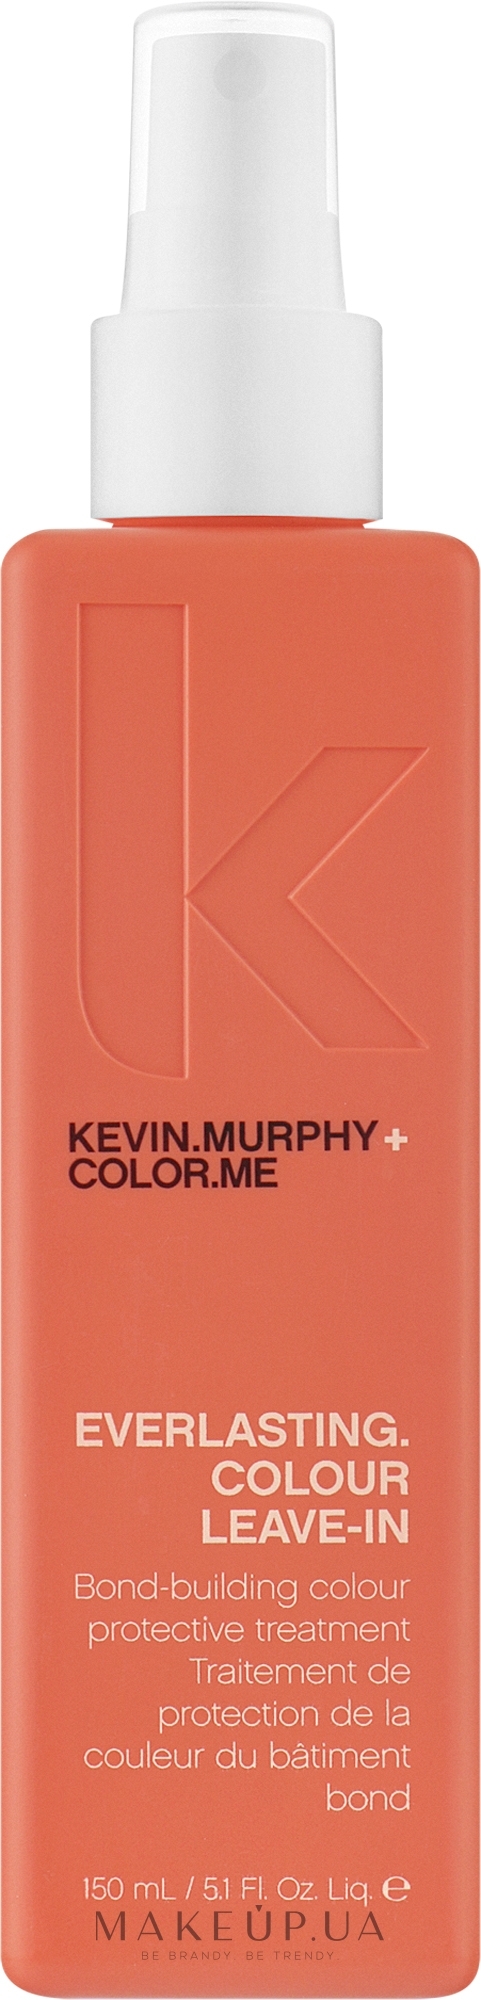 Несмываемый кондиционер для волос - Kevin.Murphy Everlasting.Colour Leave-In Treatment — фото 150ml